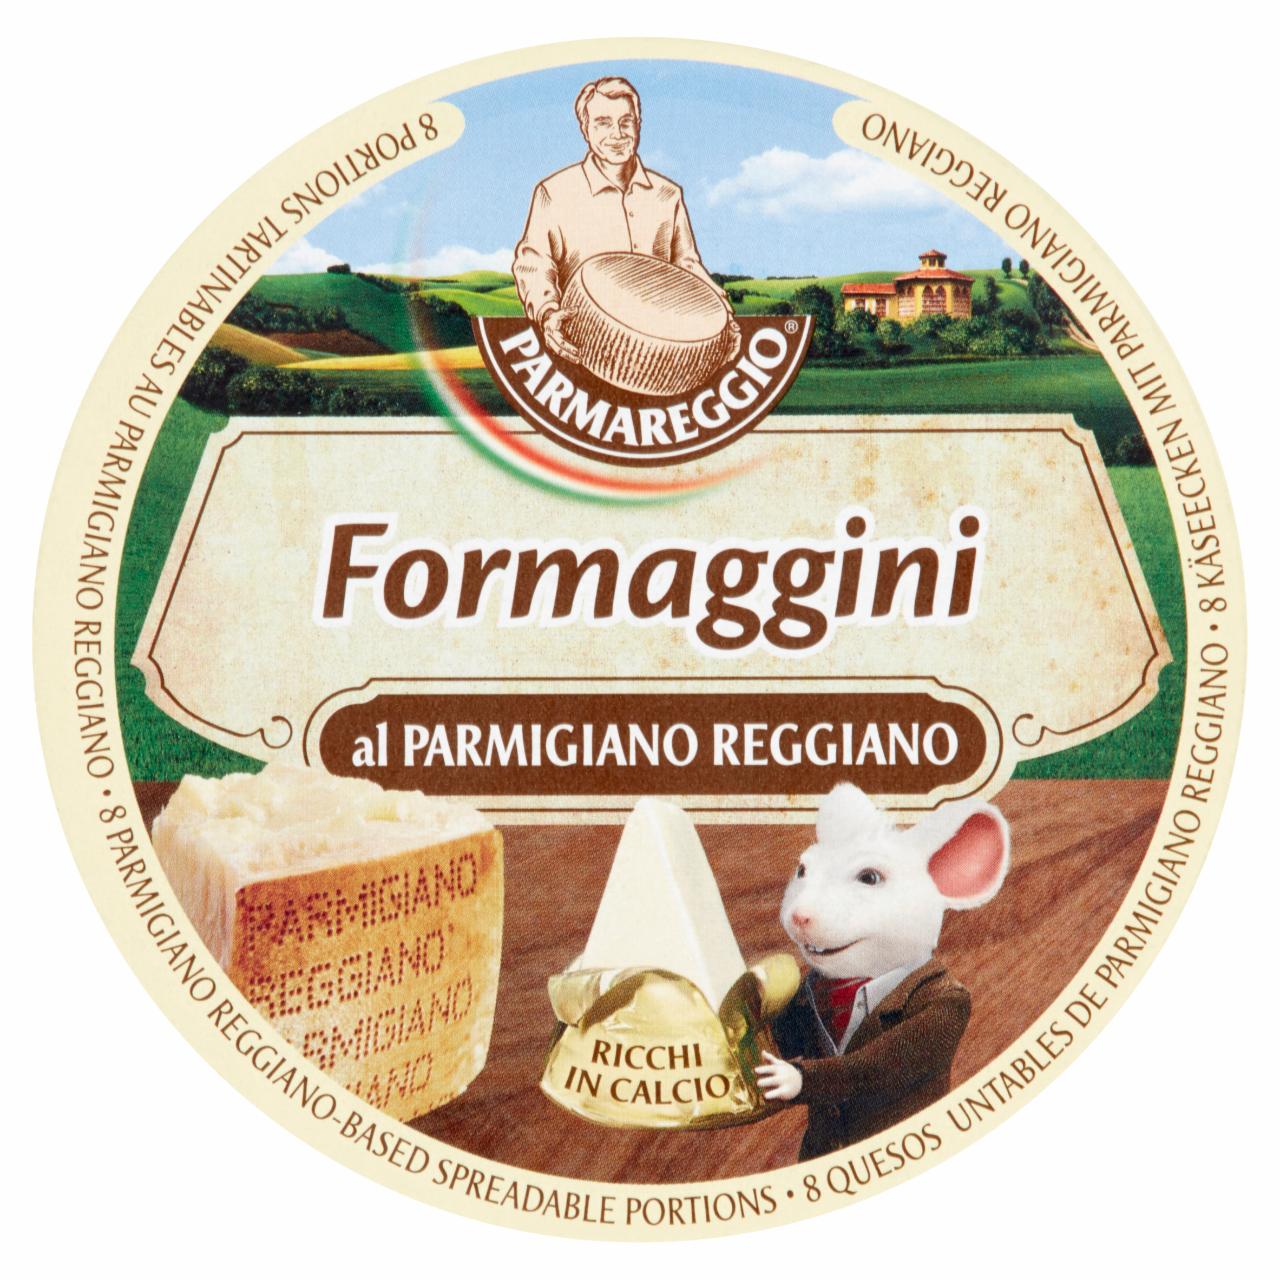 Képek - Parmareggio Formaggini Parmigiano Reggiano kenhető félzsíros ömlesztett sajt 8 db 140 g